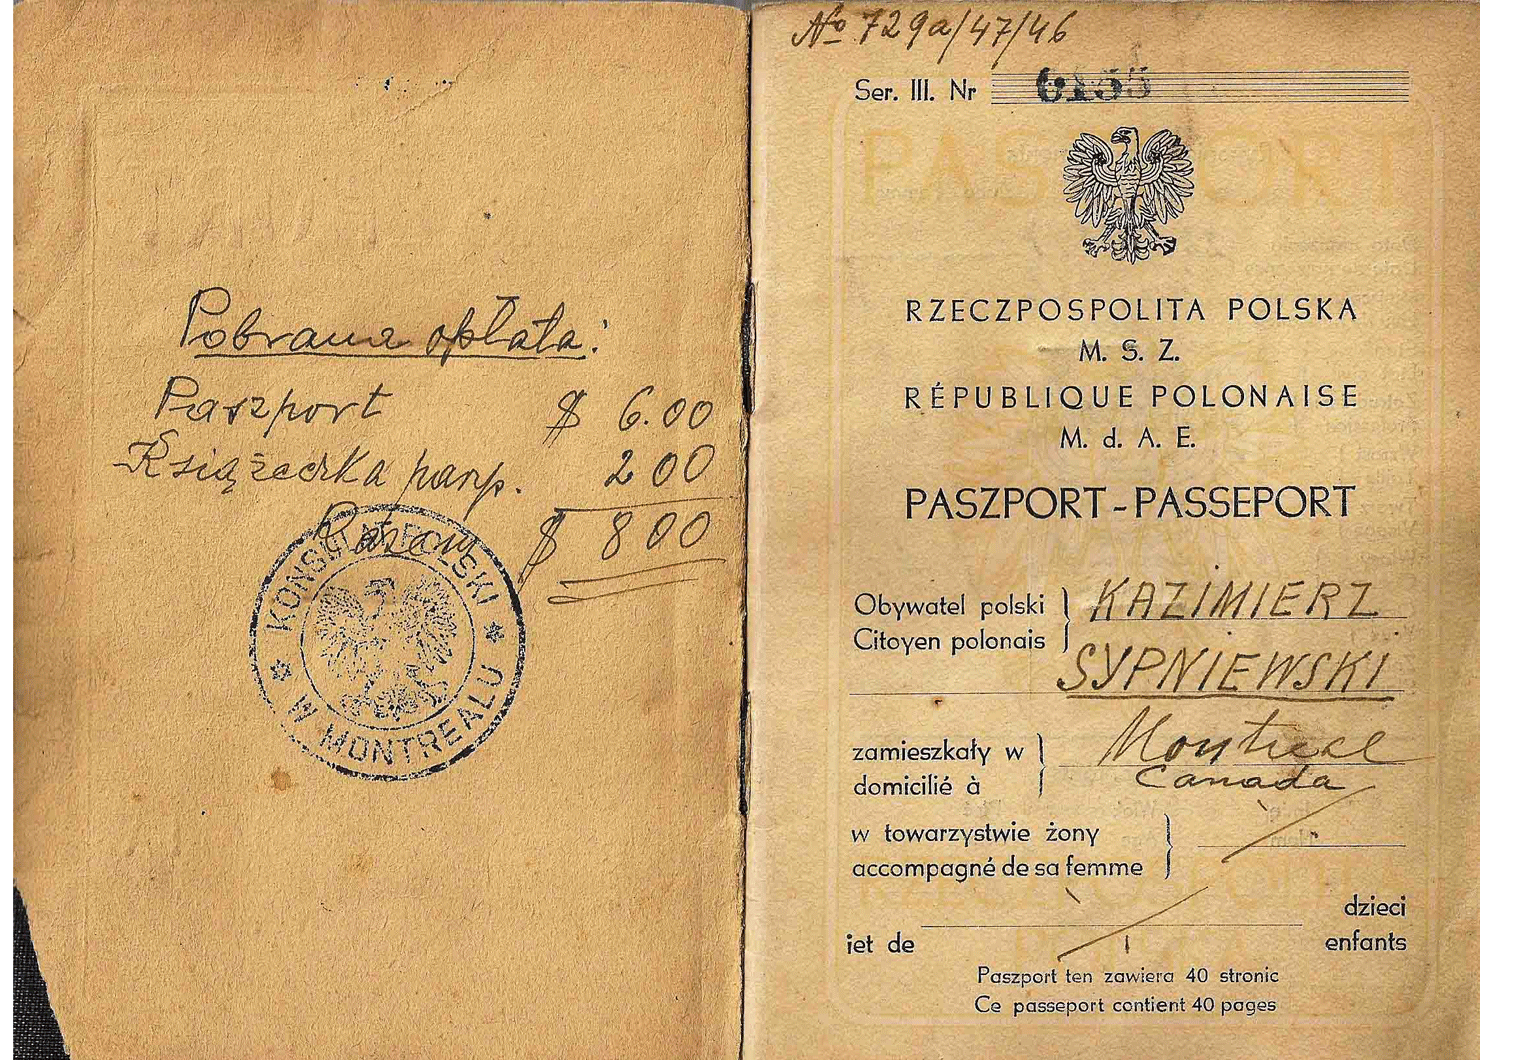 1946 Polish passport